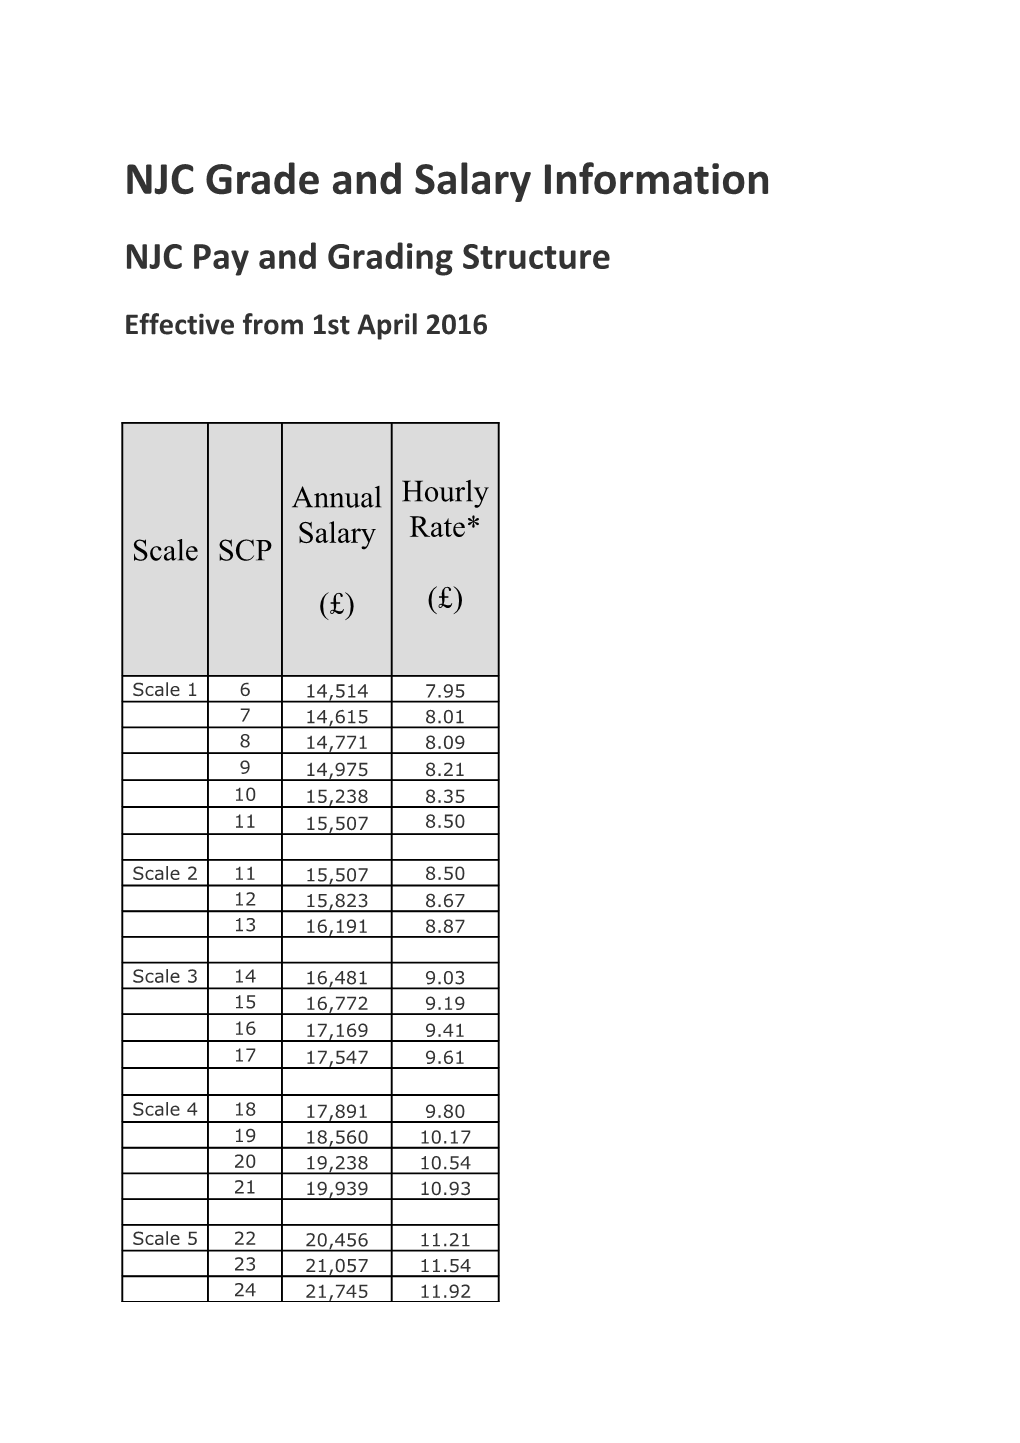 NJC Grade and Salary Information